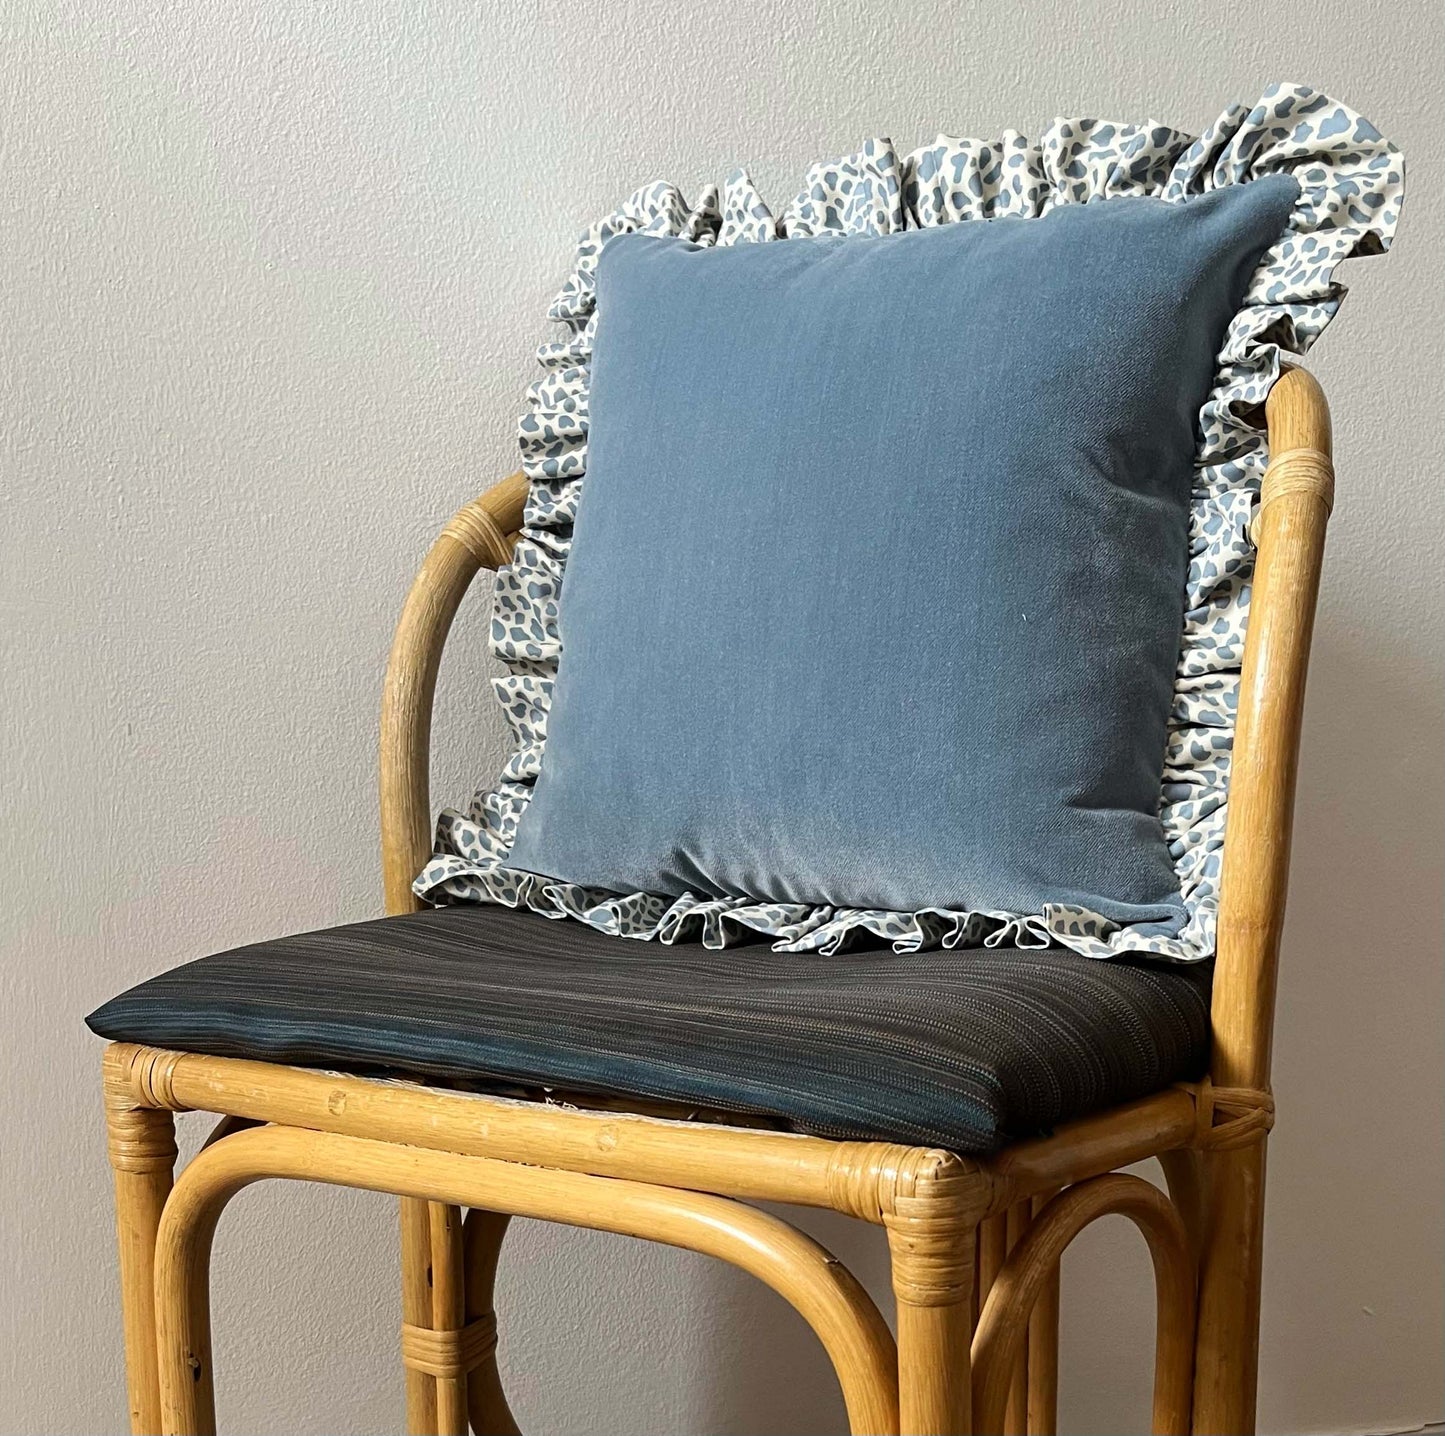 Blue Velvet Cushion with Frill Trim